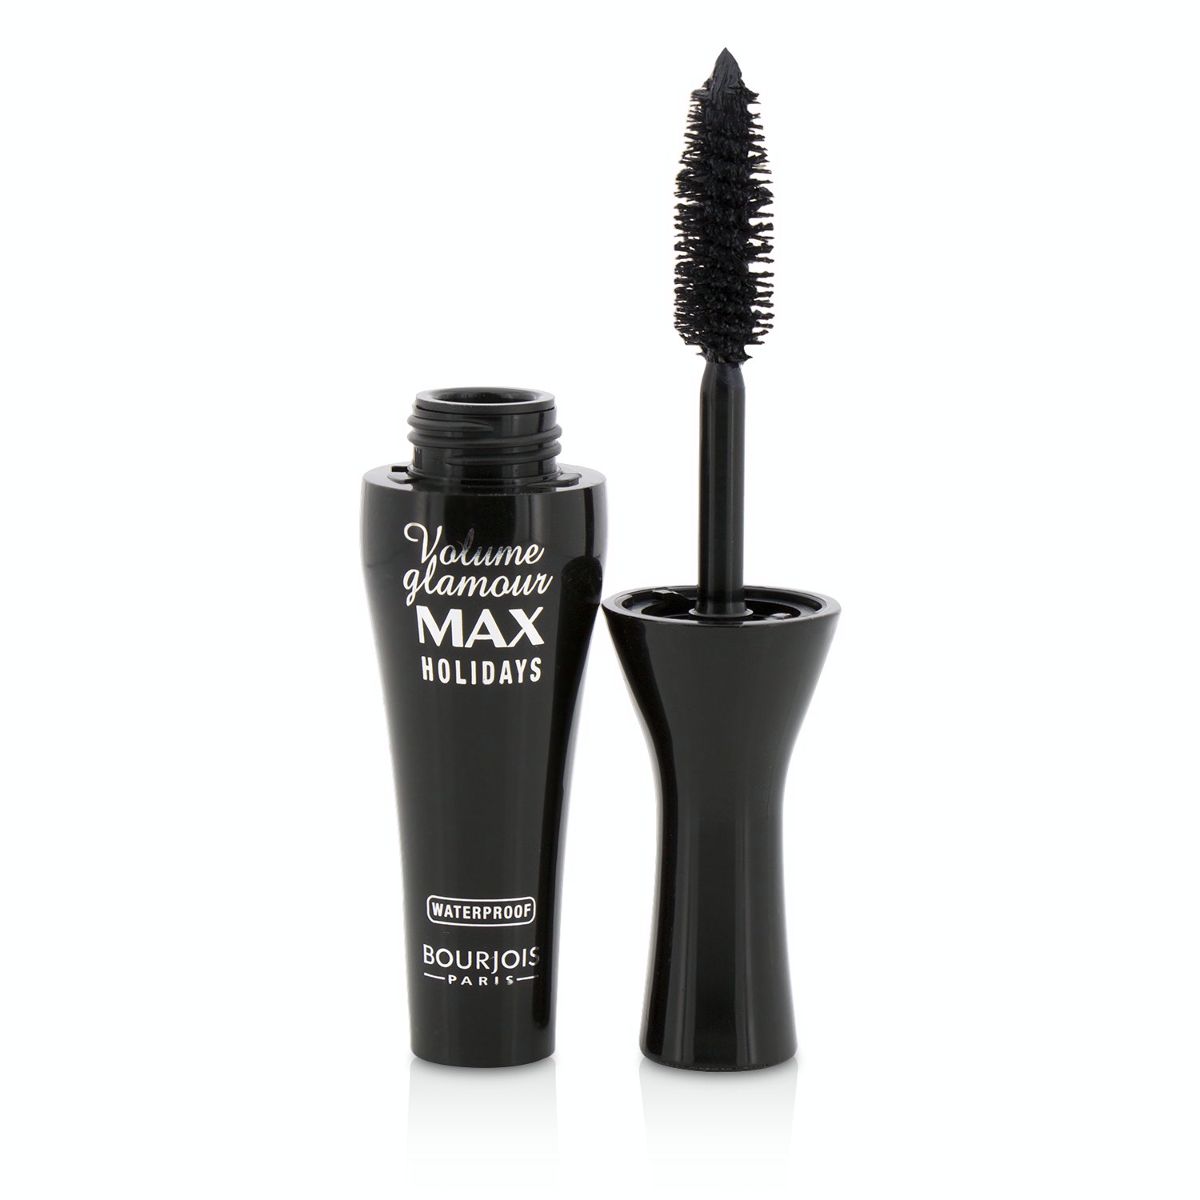 Volume Glamour Max Holidays Waterproof Mascara - # 52 Ultra Black Bourjois Image